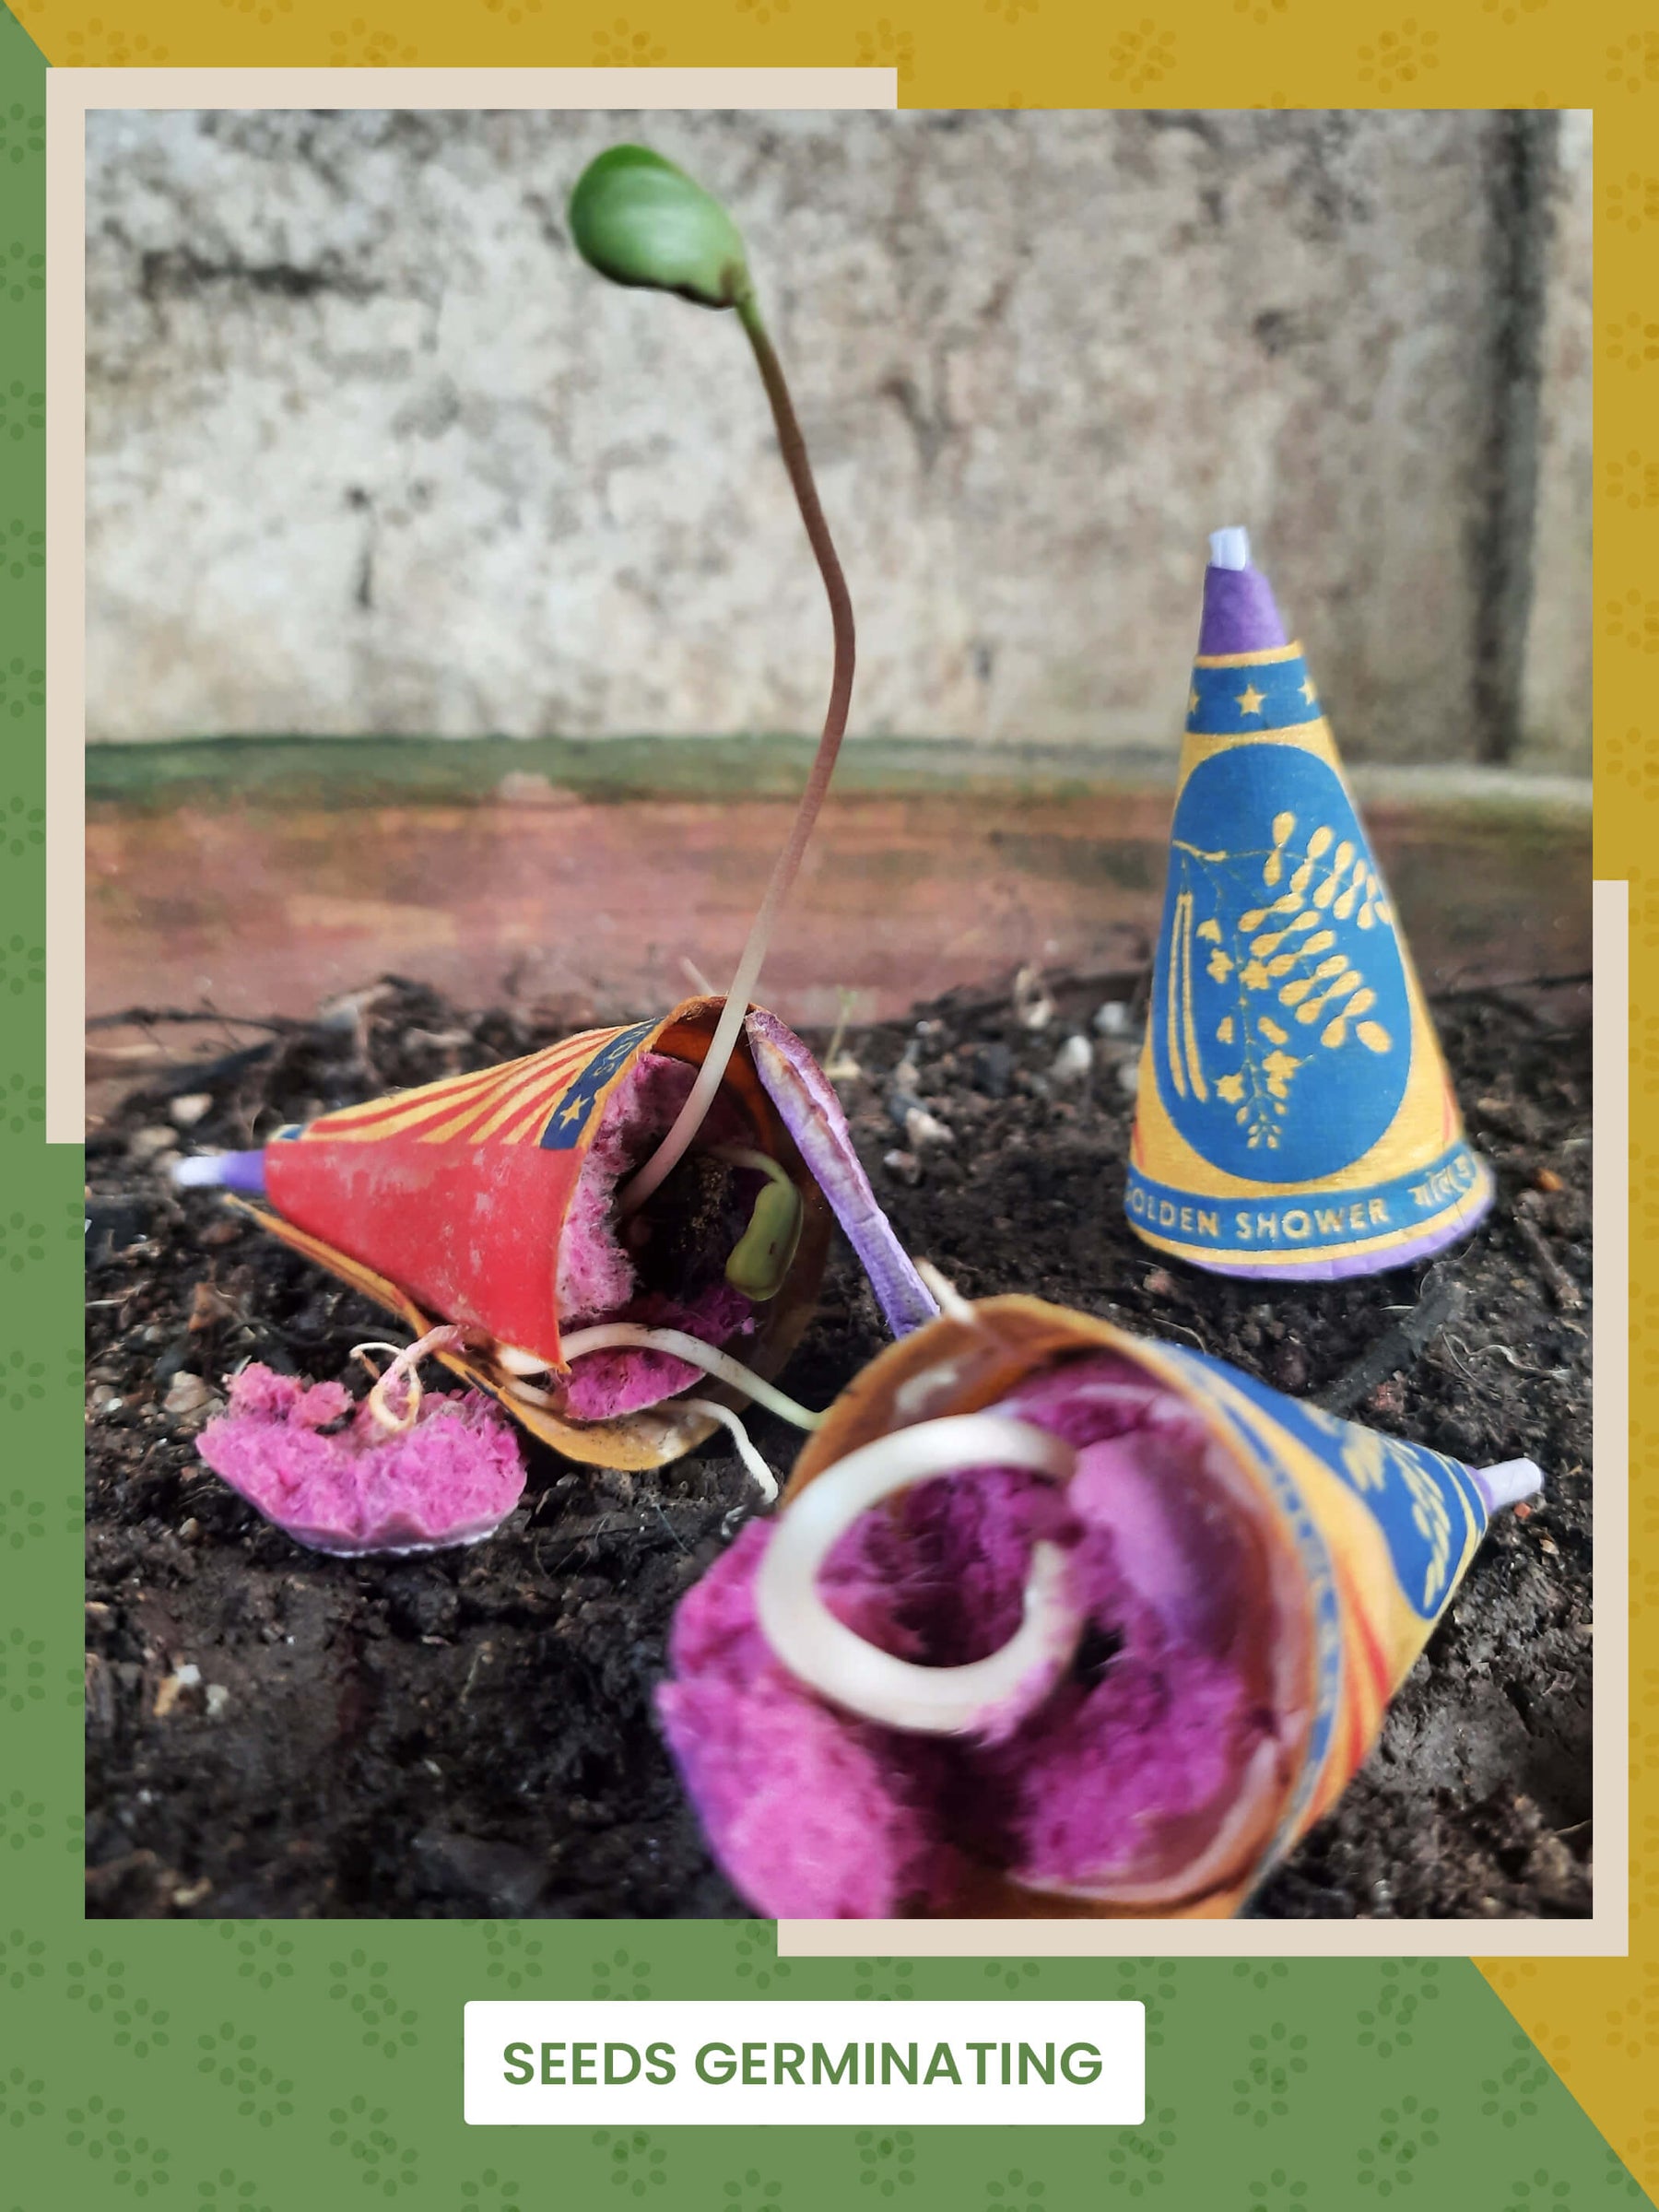 Plantable Beej Patakha Grow Kit